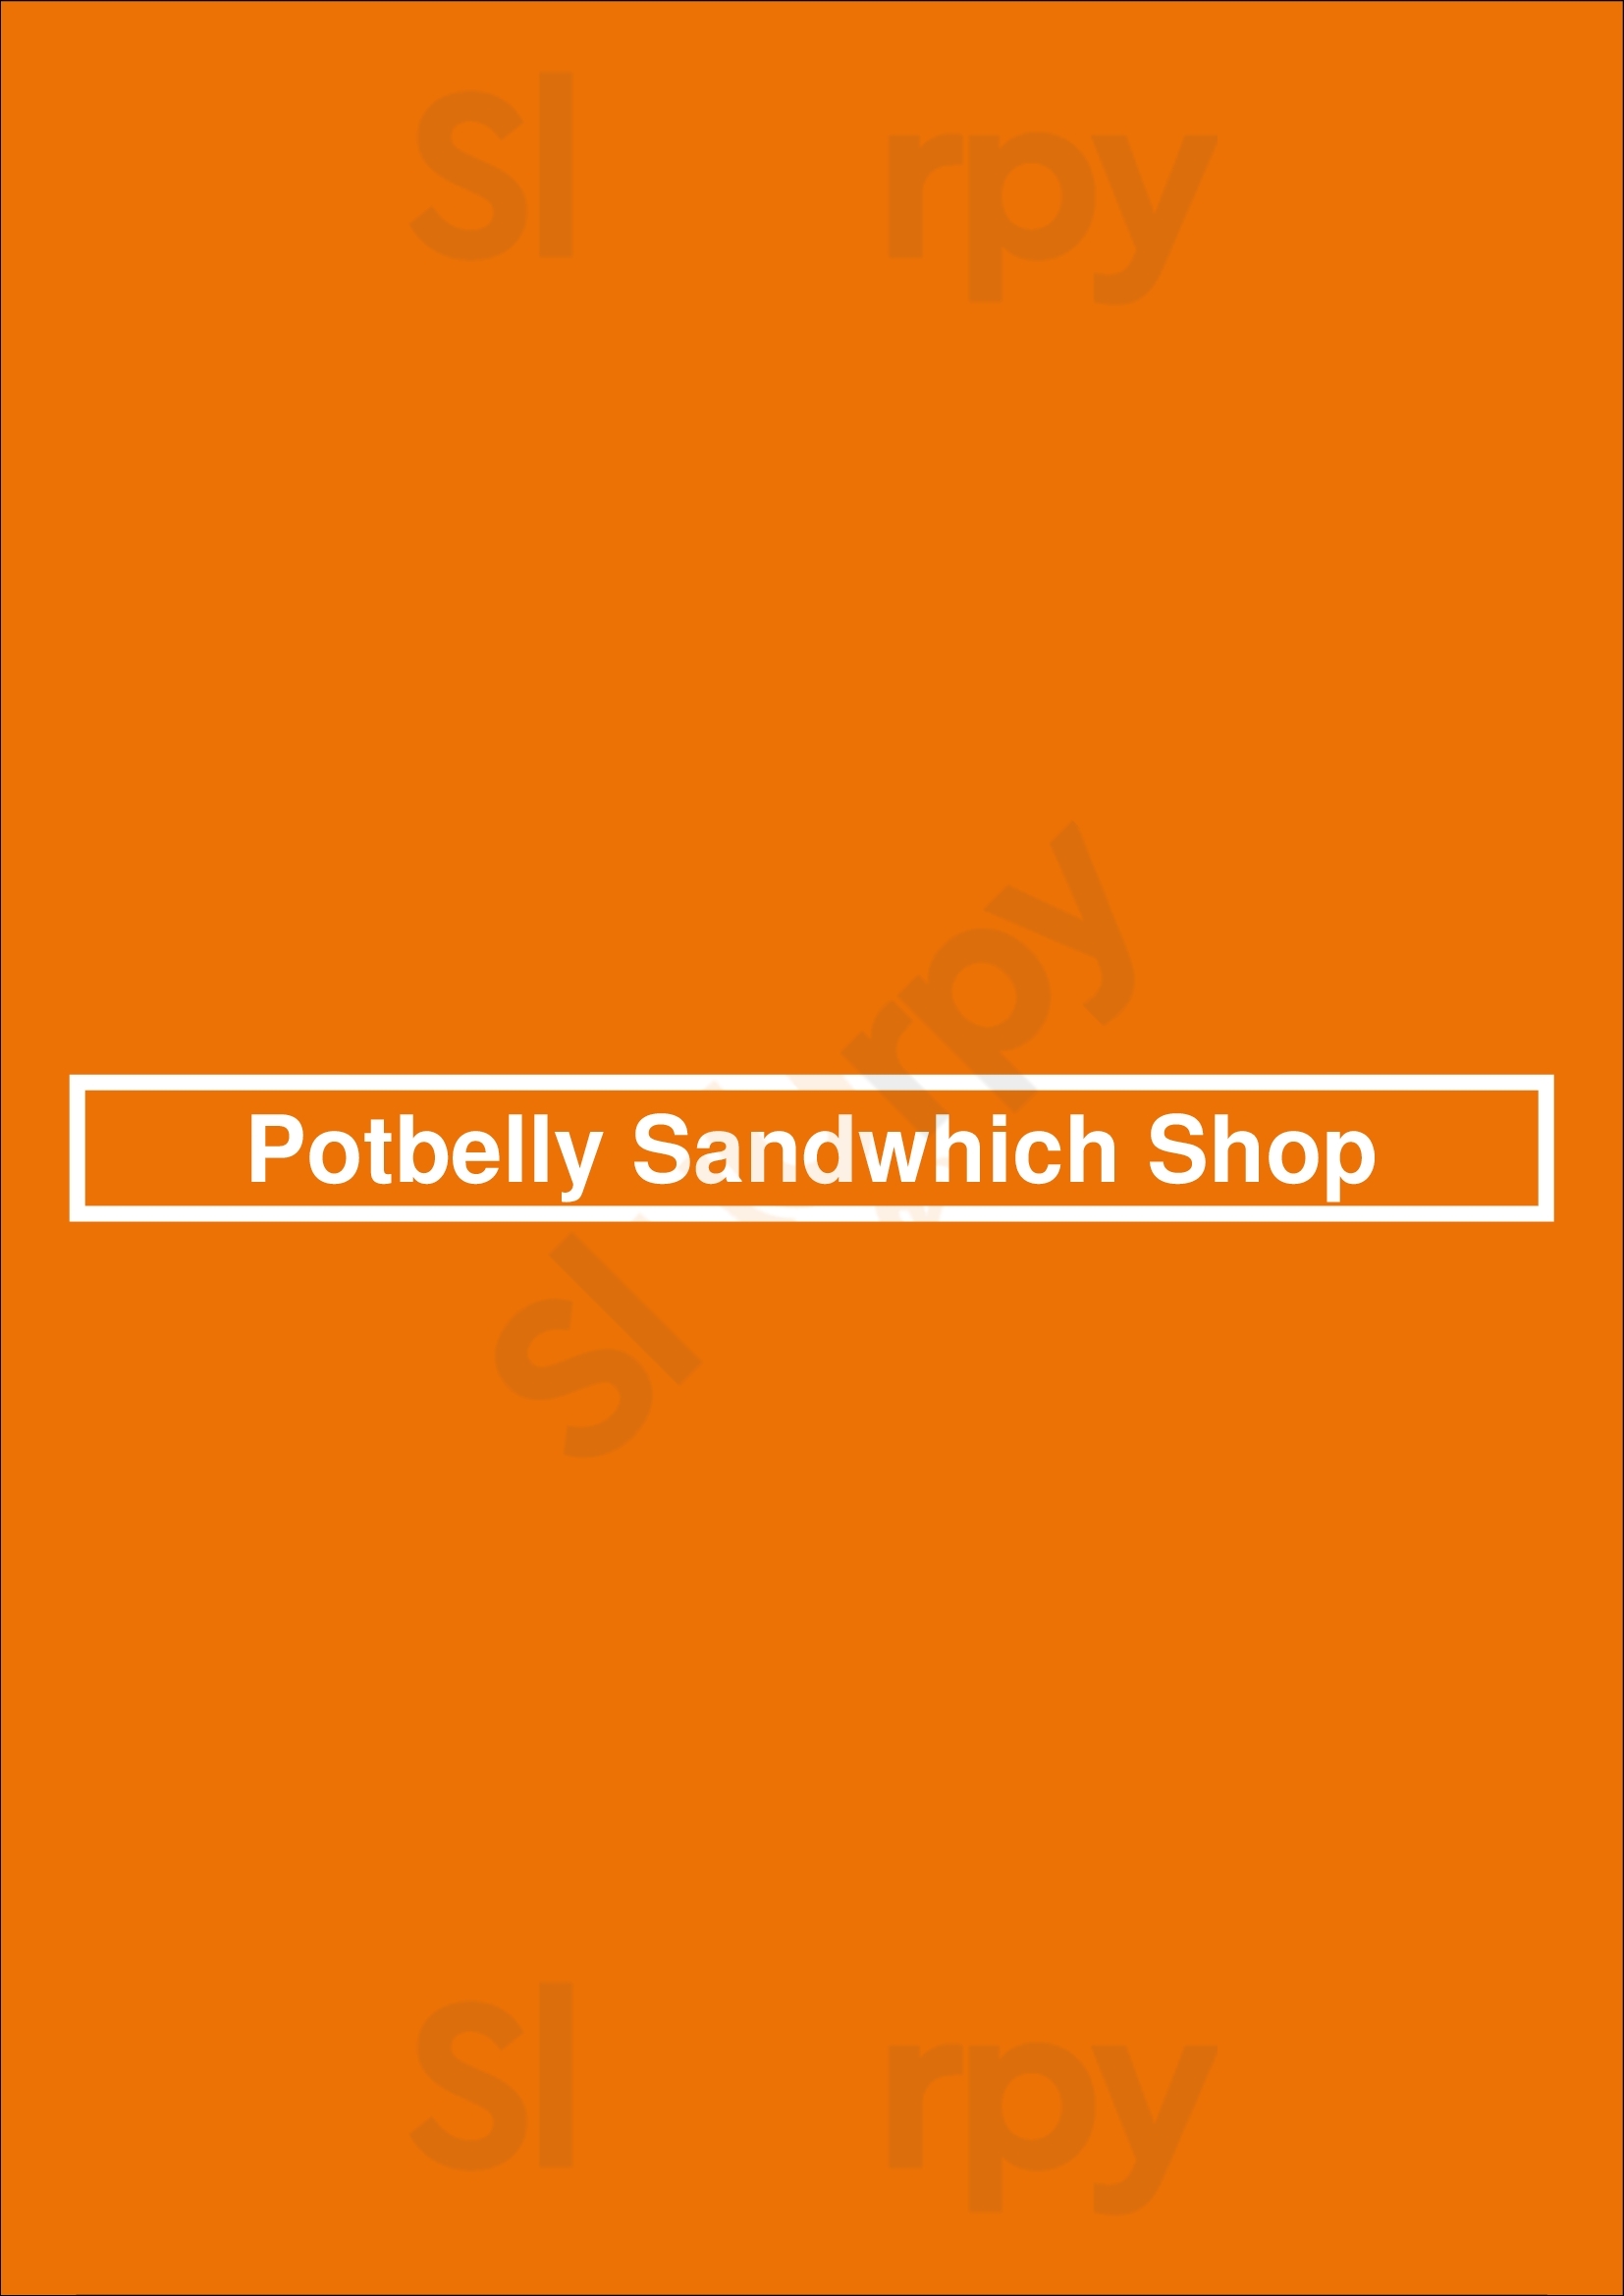 Potbelly Sandwich Shop Columbus Menu - 1